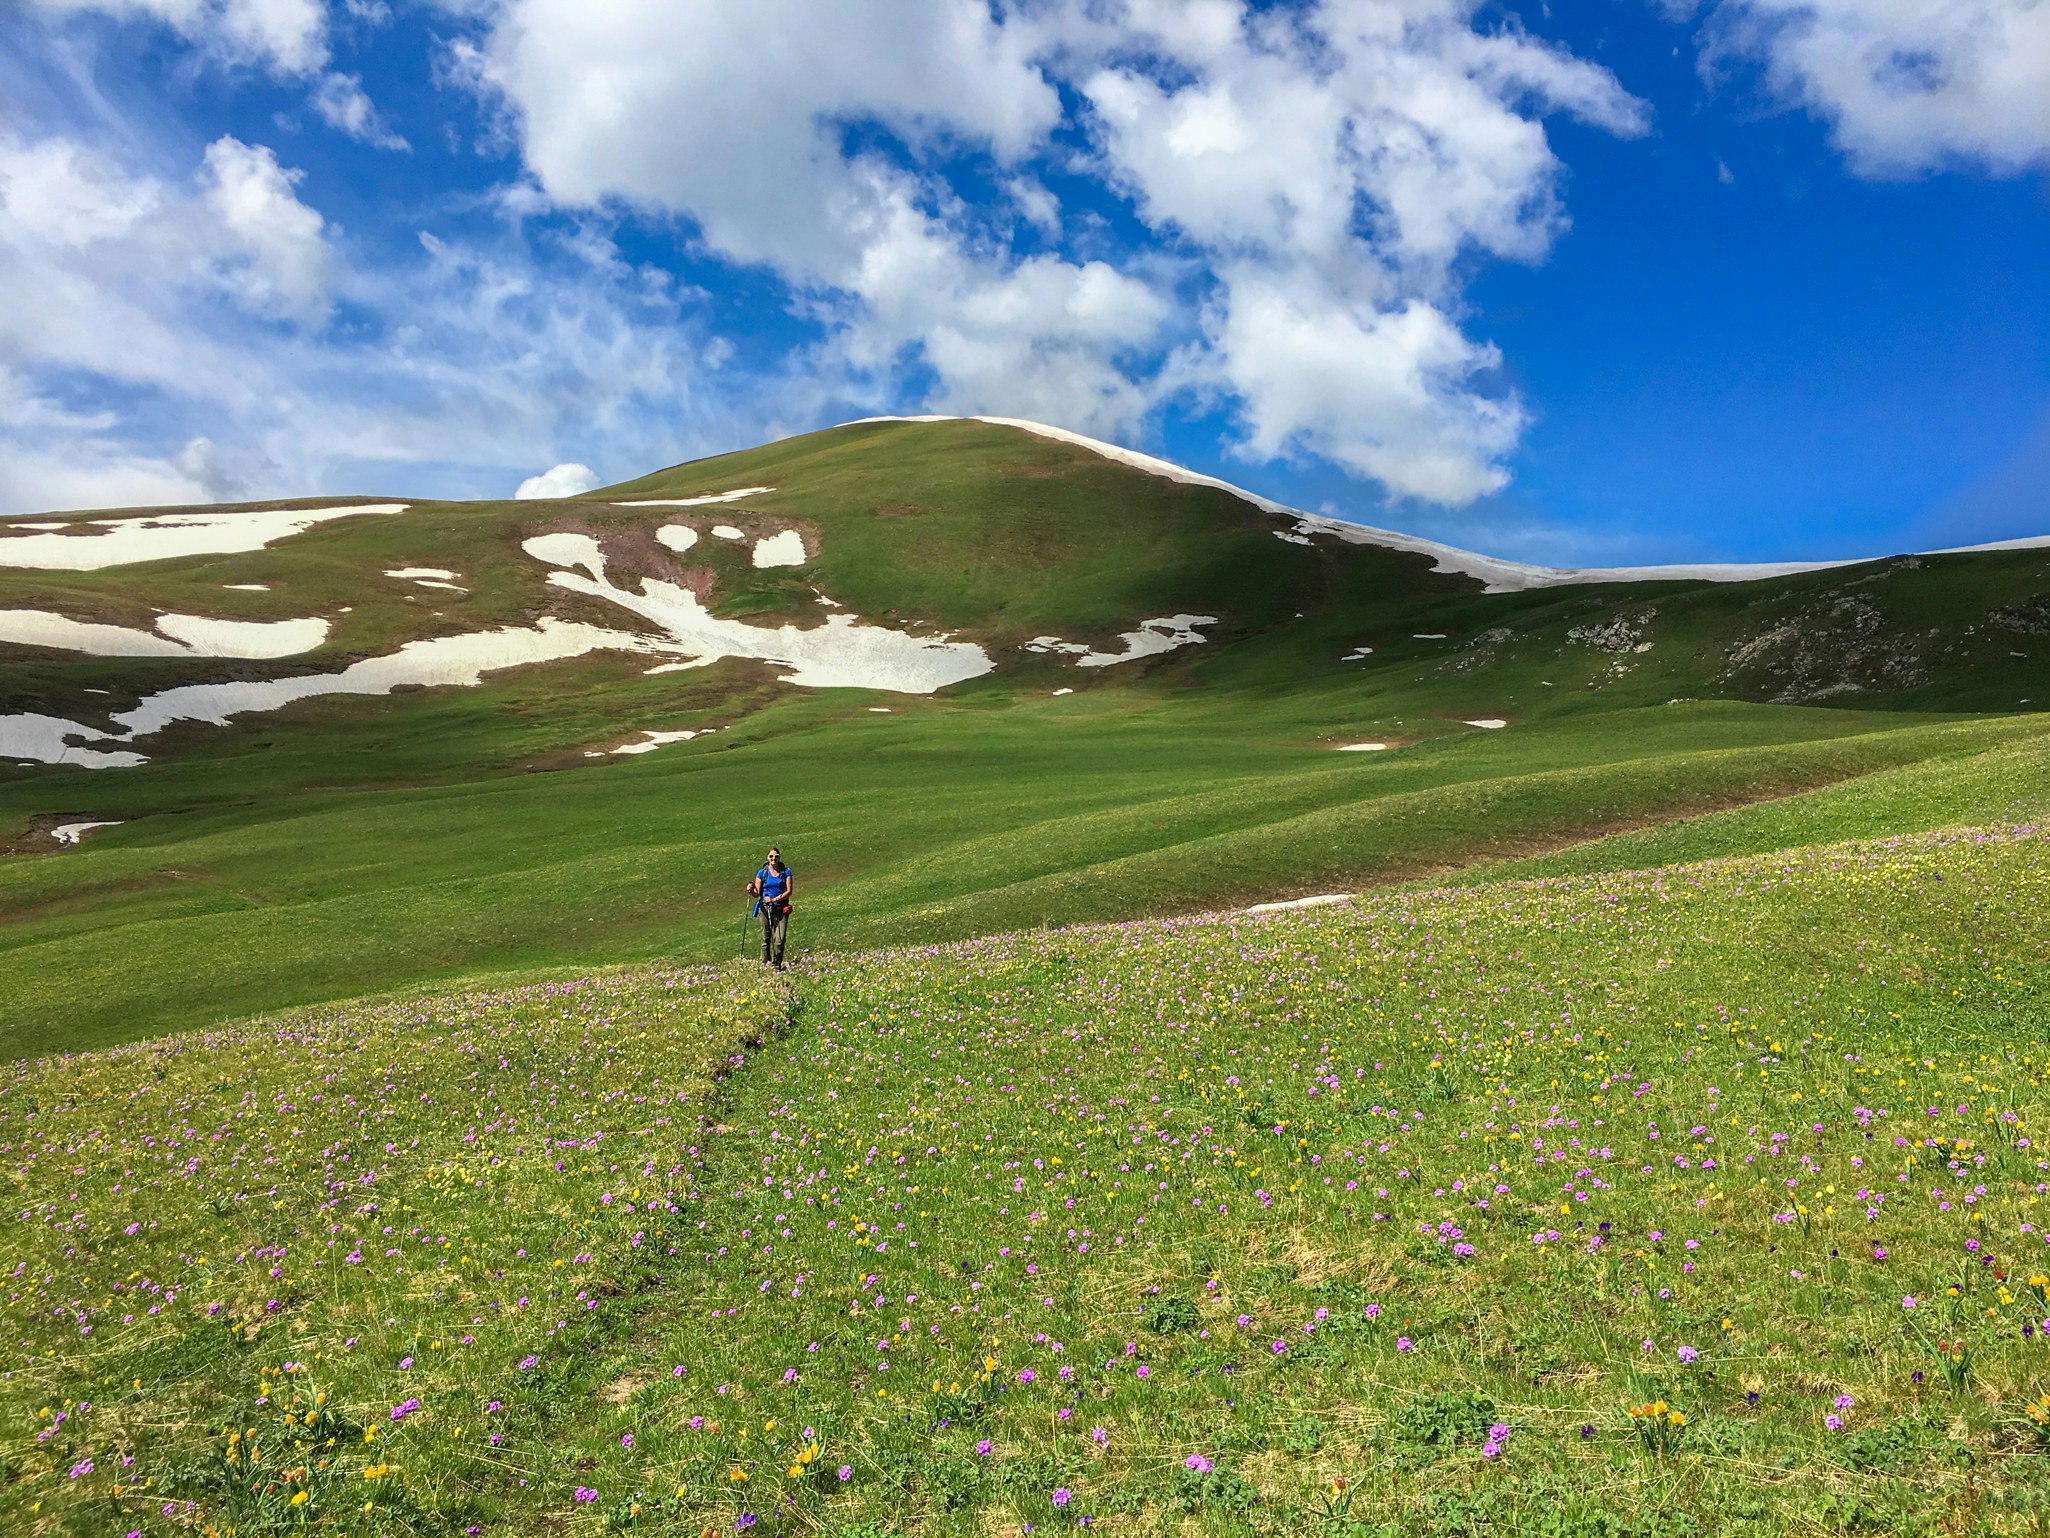 A hiker walks through a field with purple flowers in Kyrgyzstan.